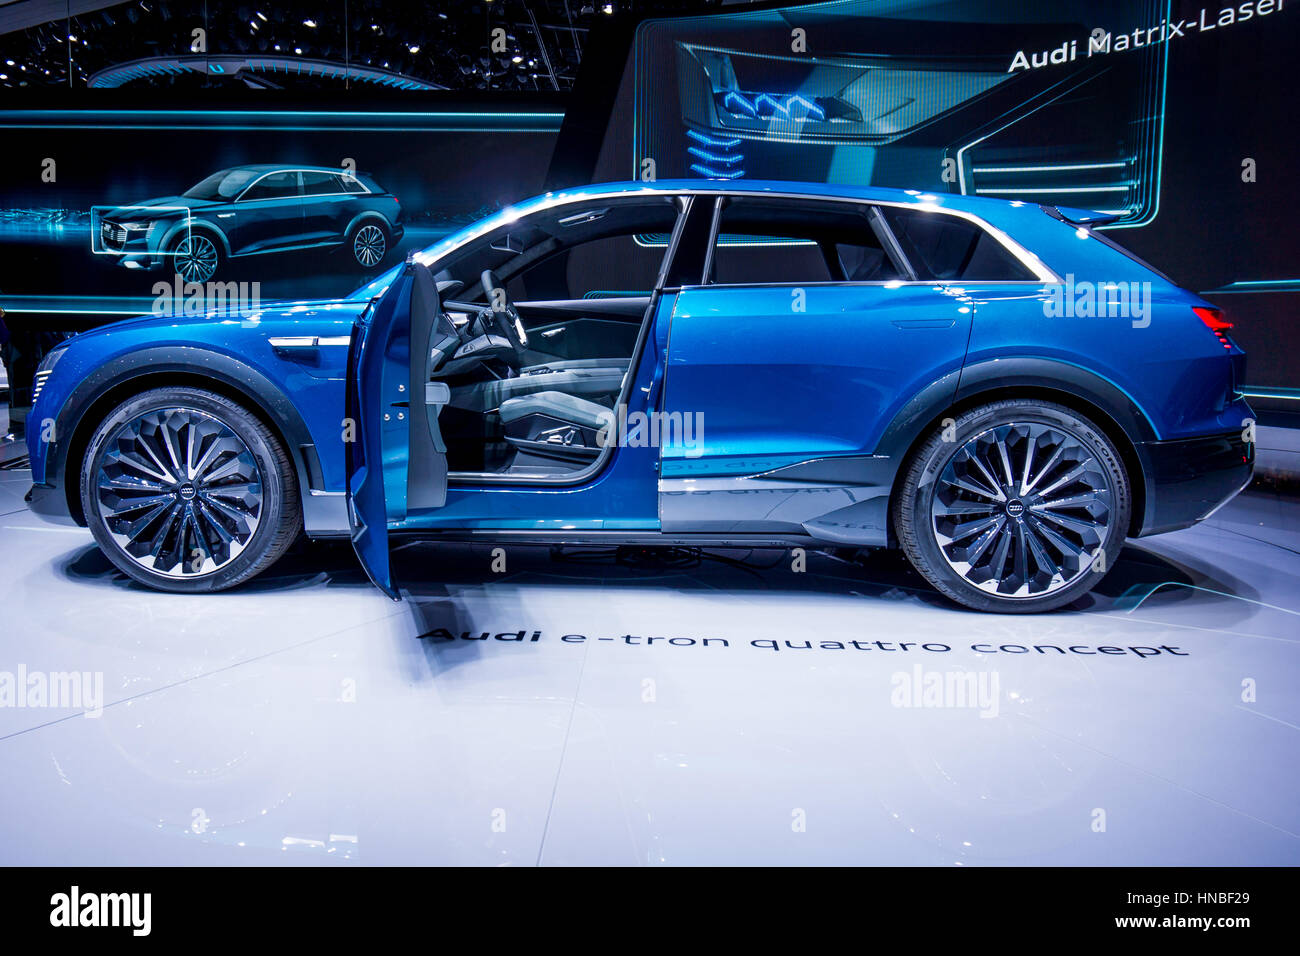 Frankfurt, Germany - September 22, 2015: Audi e-tron  concept car presented on display in Frankfurt. Germany Stock Photo